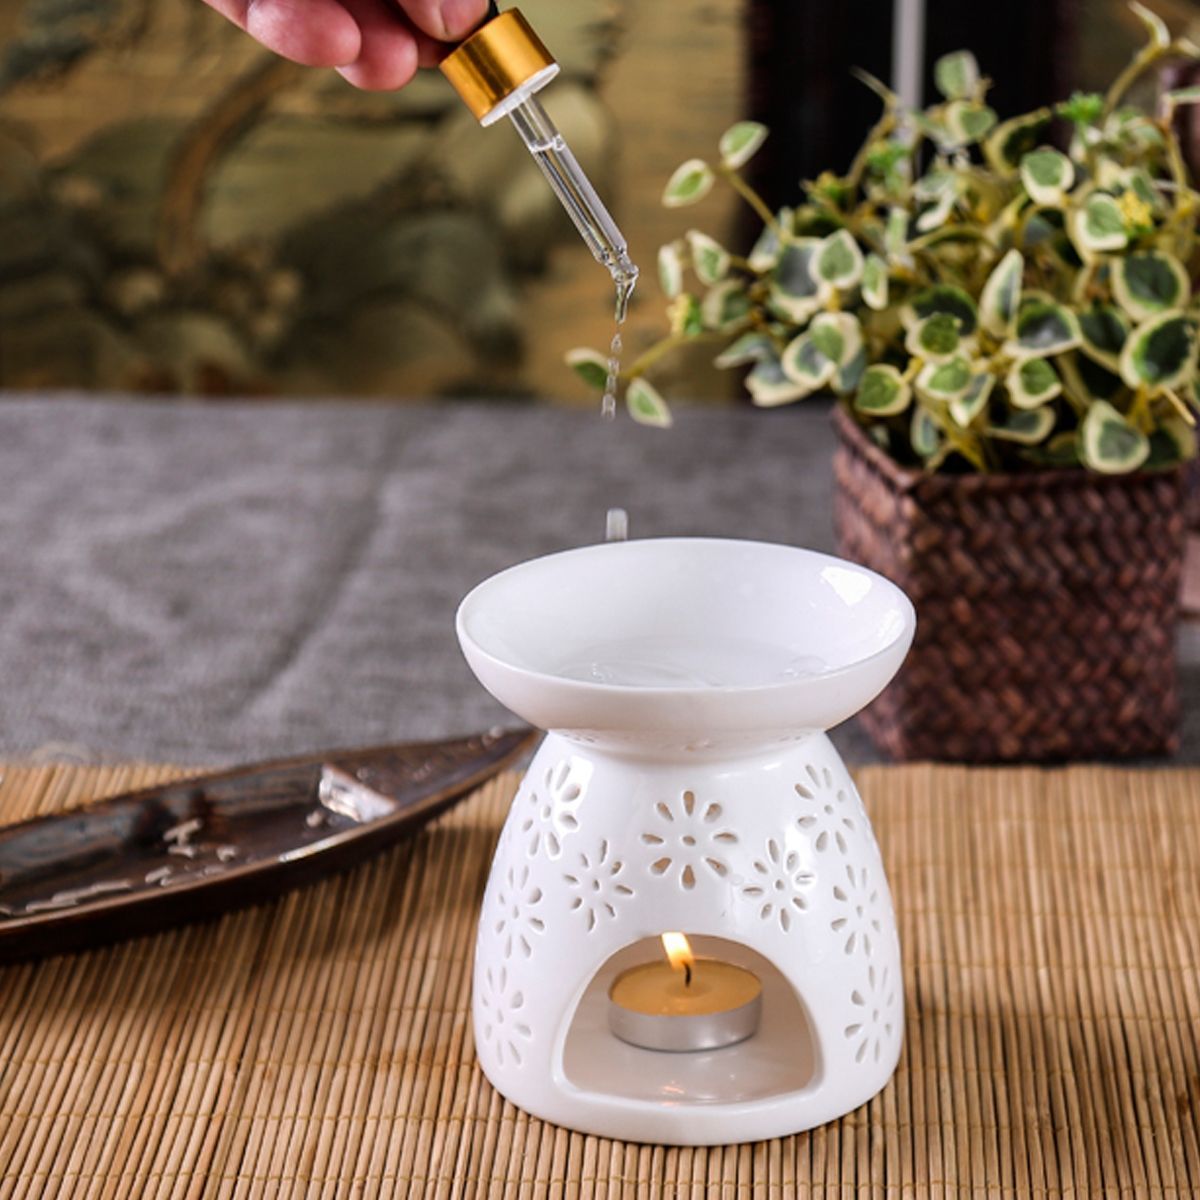 Ceramic-Wax-Melt-WarmerOil-Incense-Burner-Daisy-Cut-Out-Design-Incense-Holder-1436132